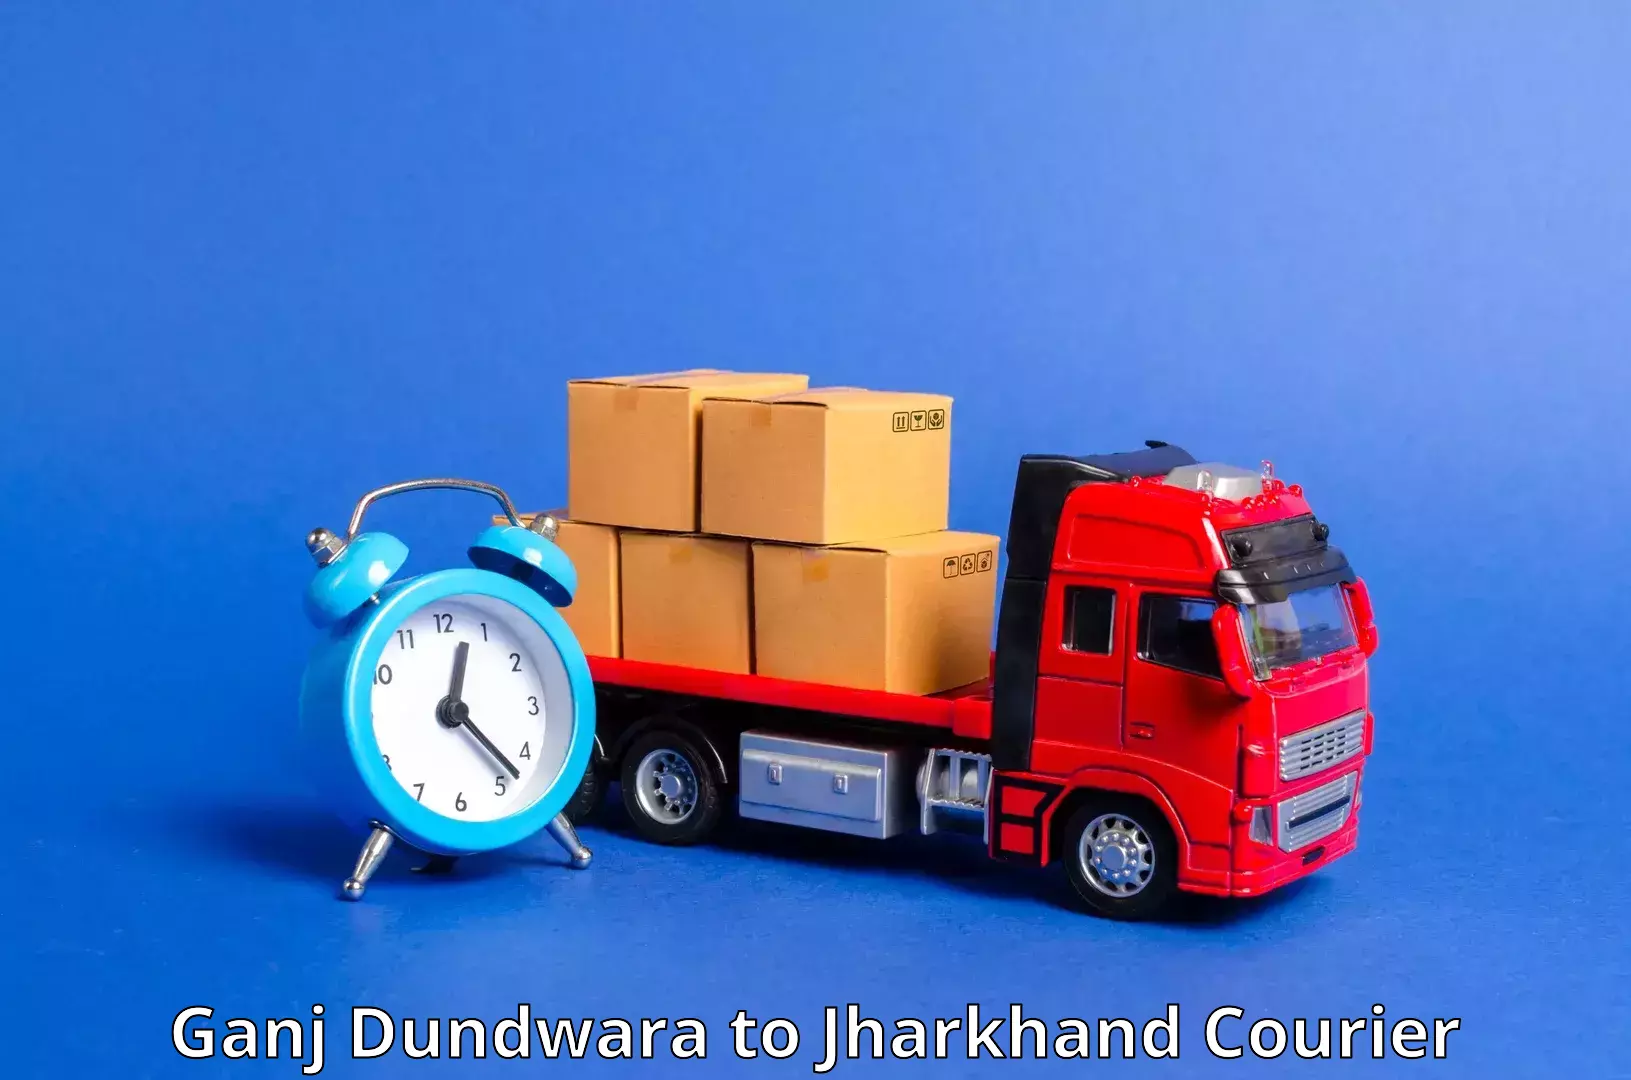 State-of-the-art courier technology Ganj Dundwara to Phusro